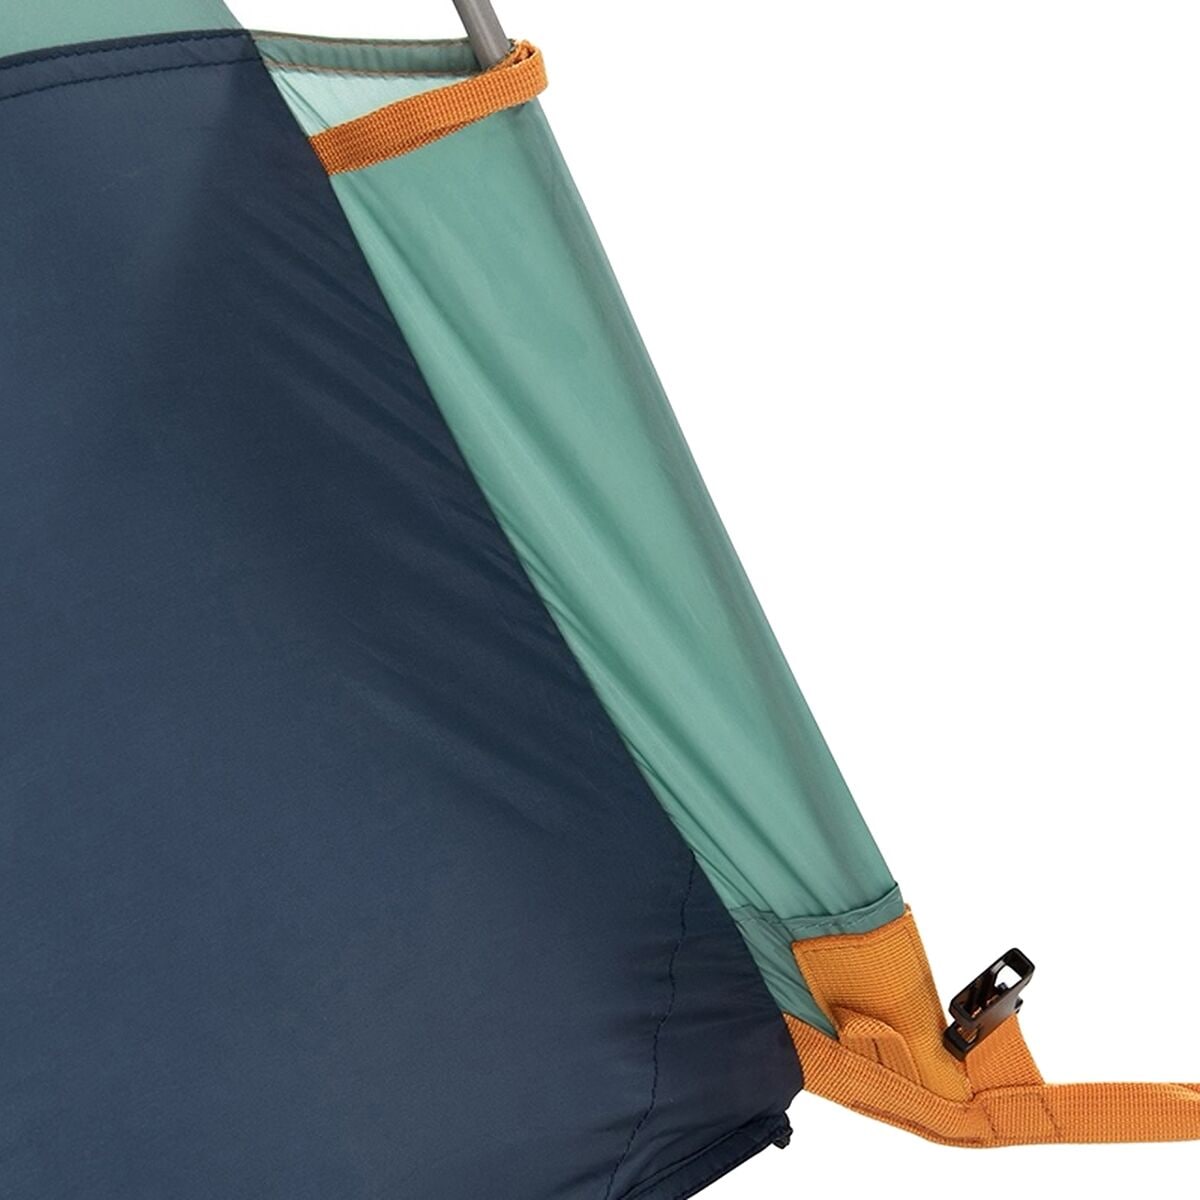  Kelty Wireless 2 Tent: 2-Person 3-Season - Hike & Camp